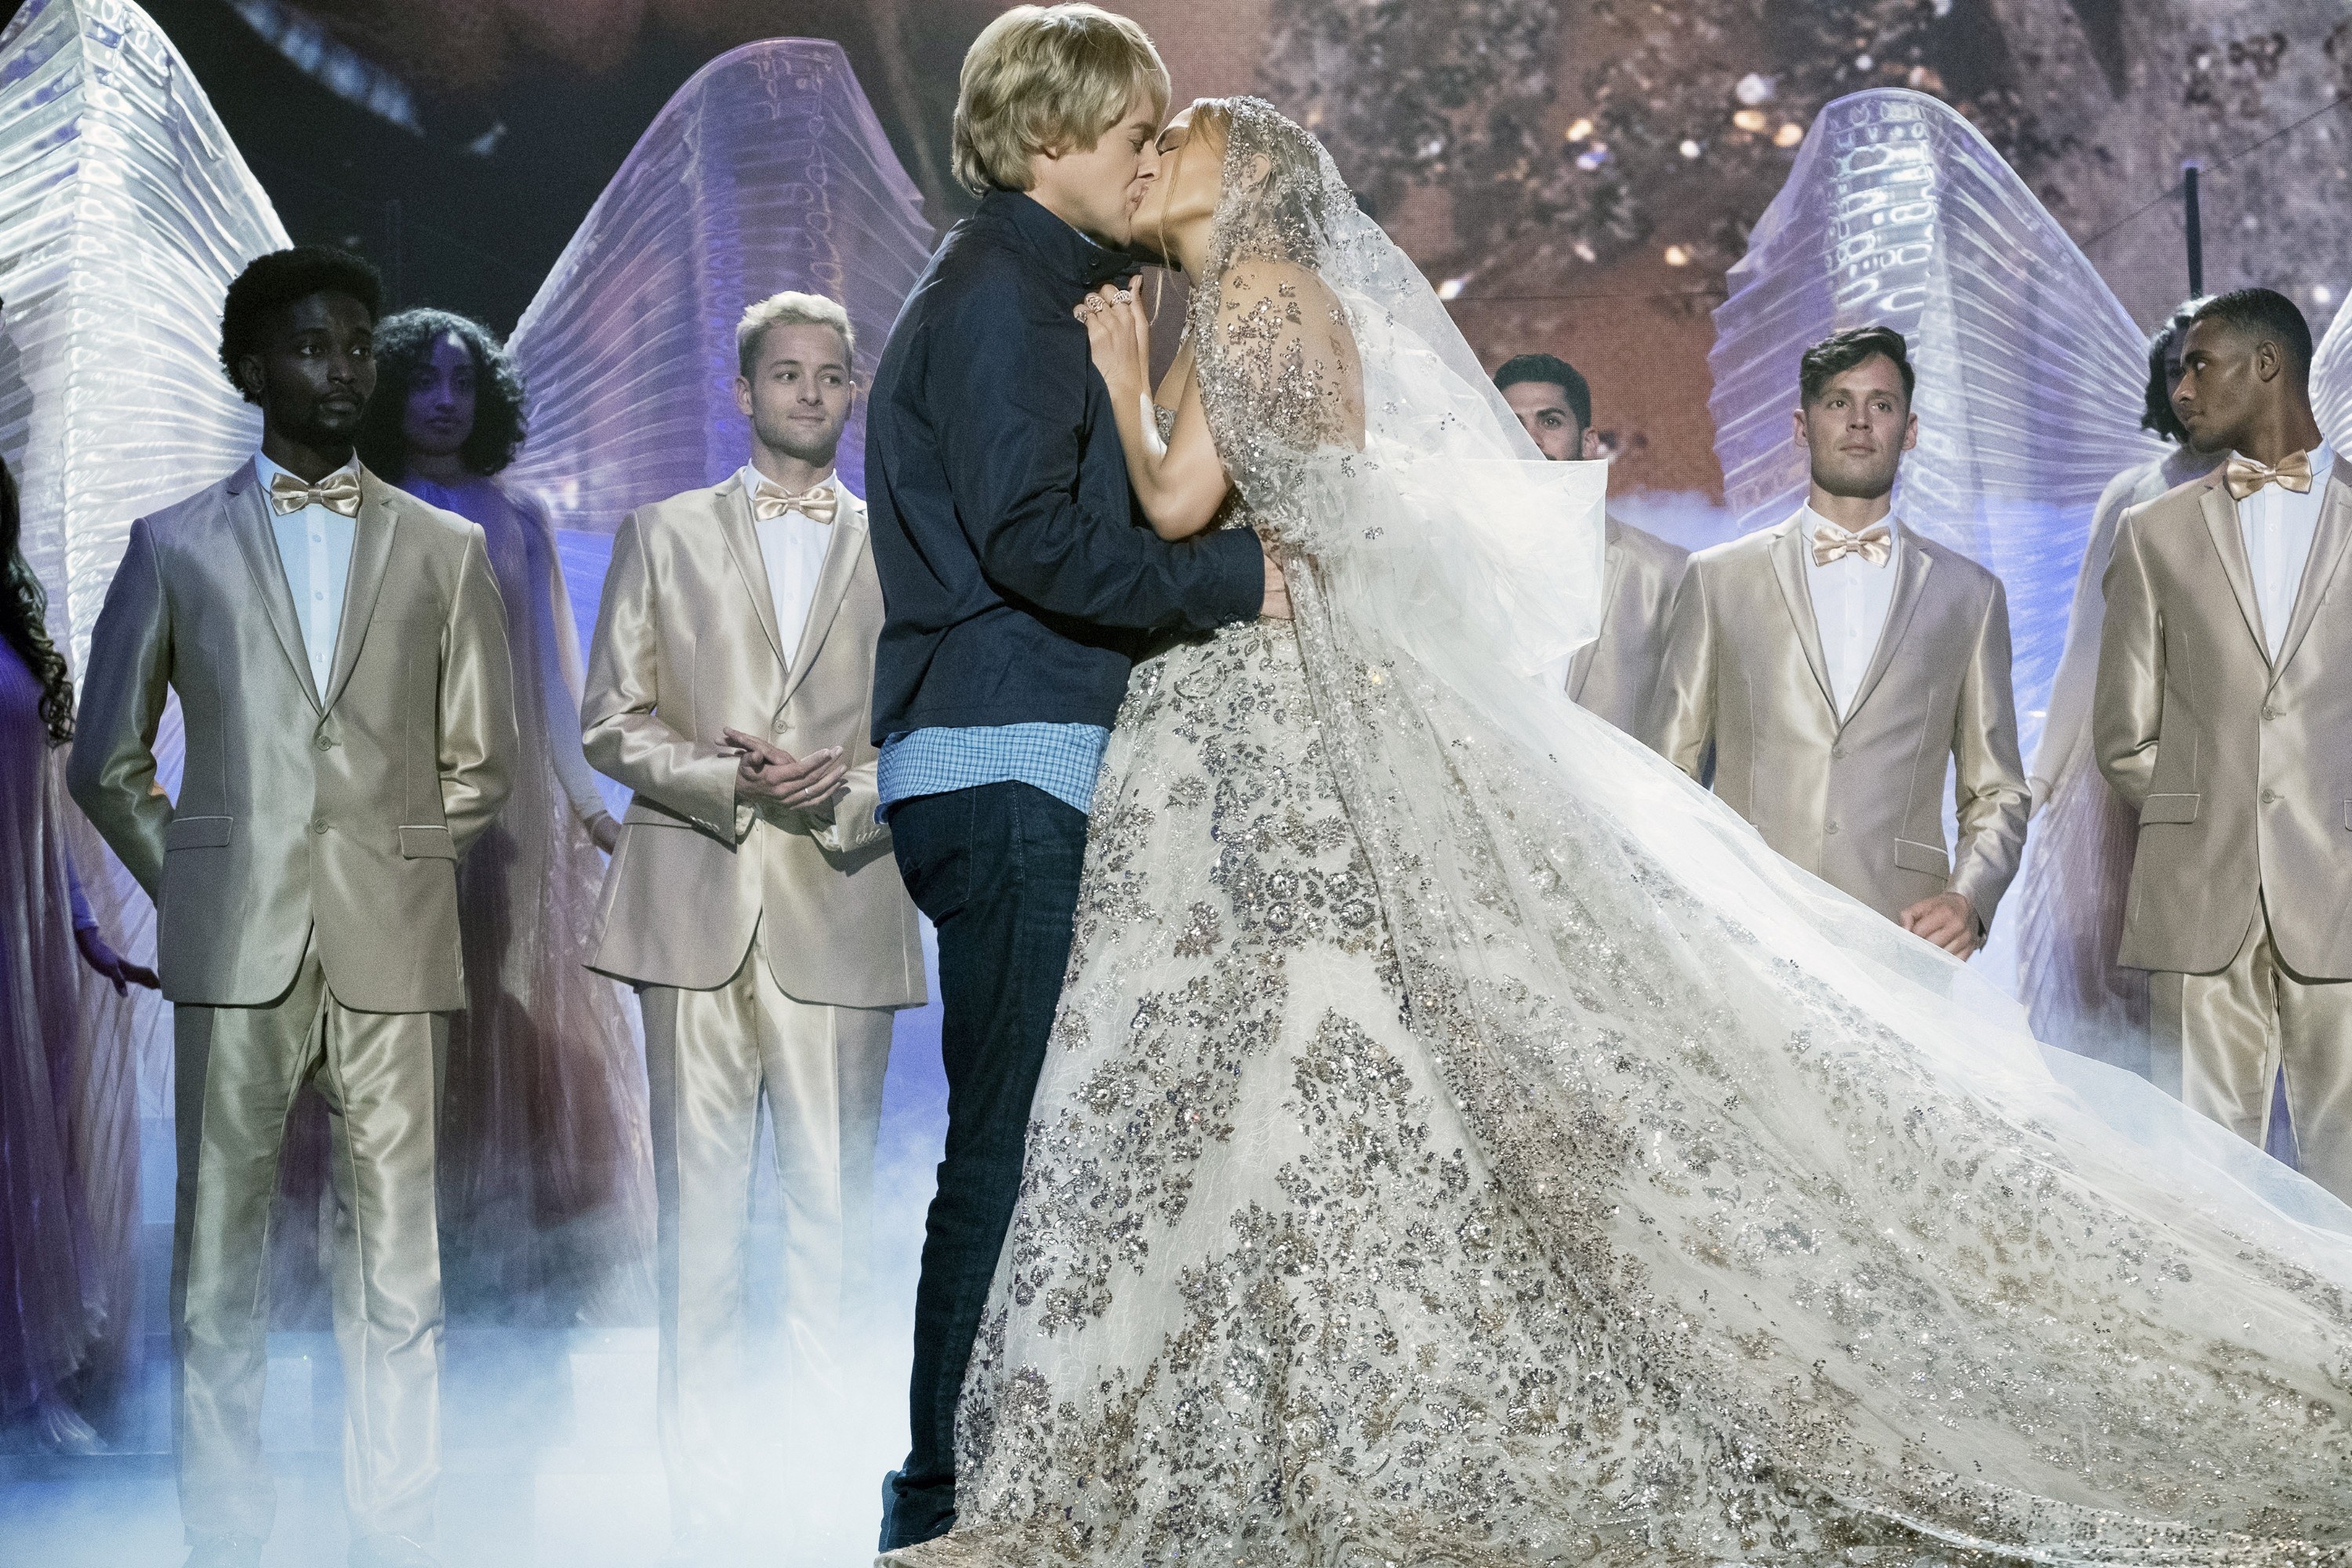 Owen Wilson and Jennifer Lopez kiss on stage